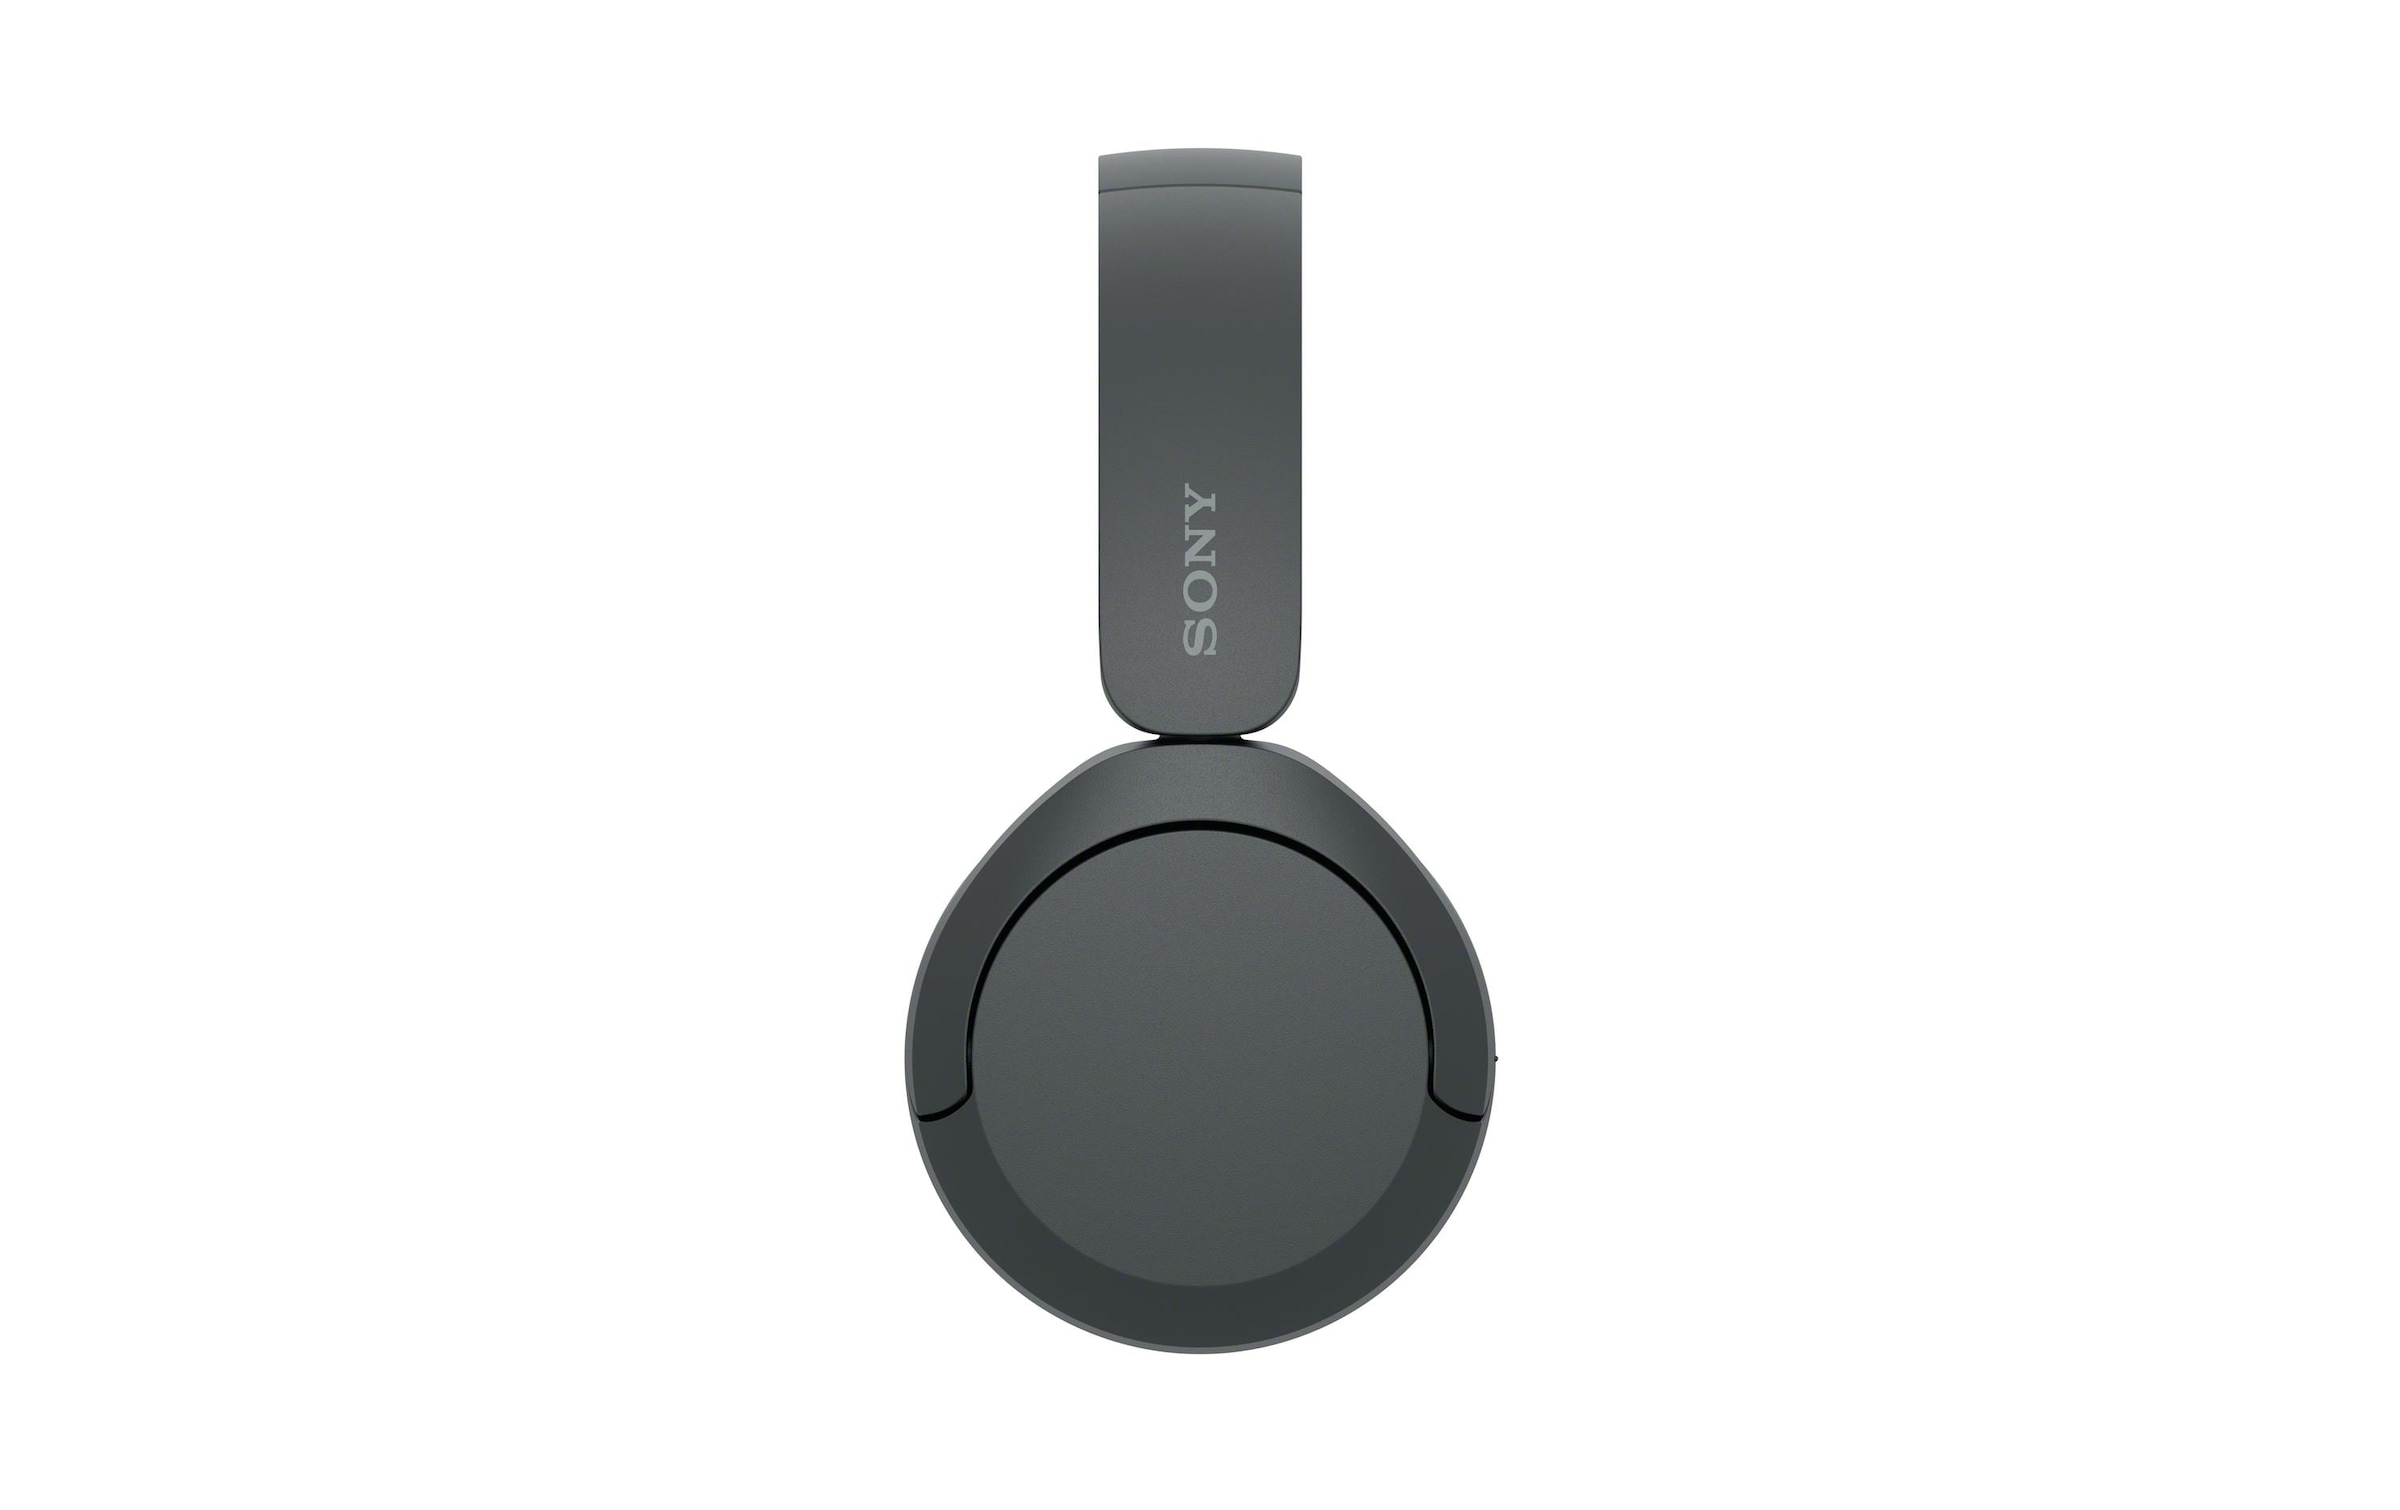 Sony Over-Ear-Kopfhörer »WH«, Bluetooth